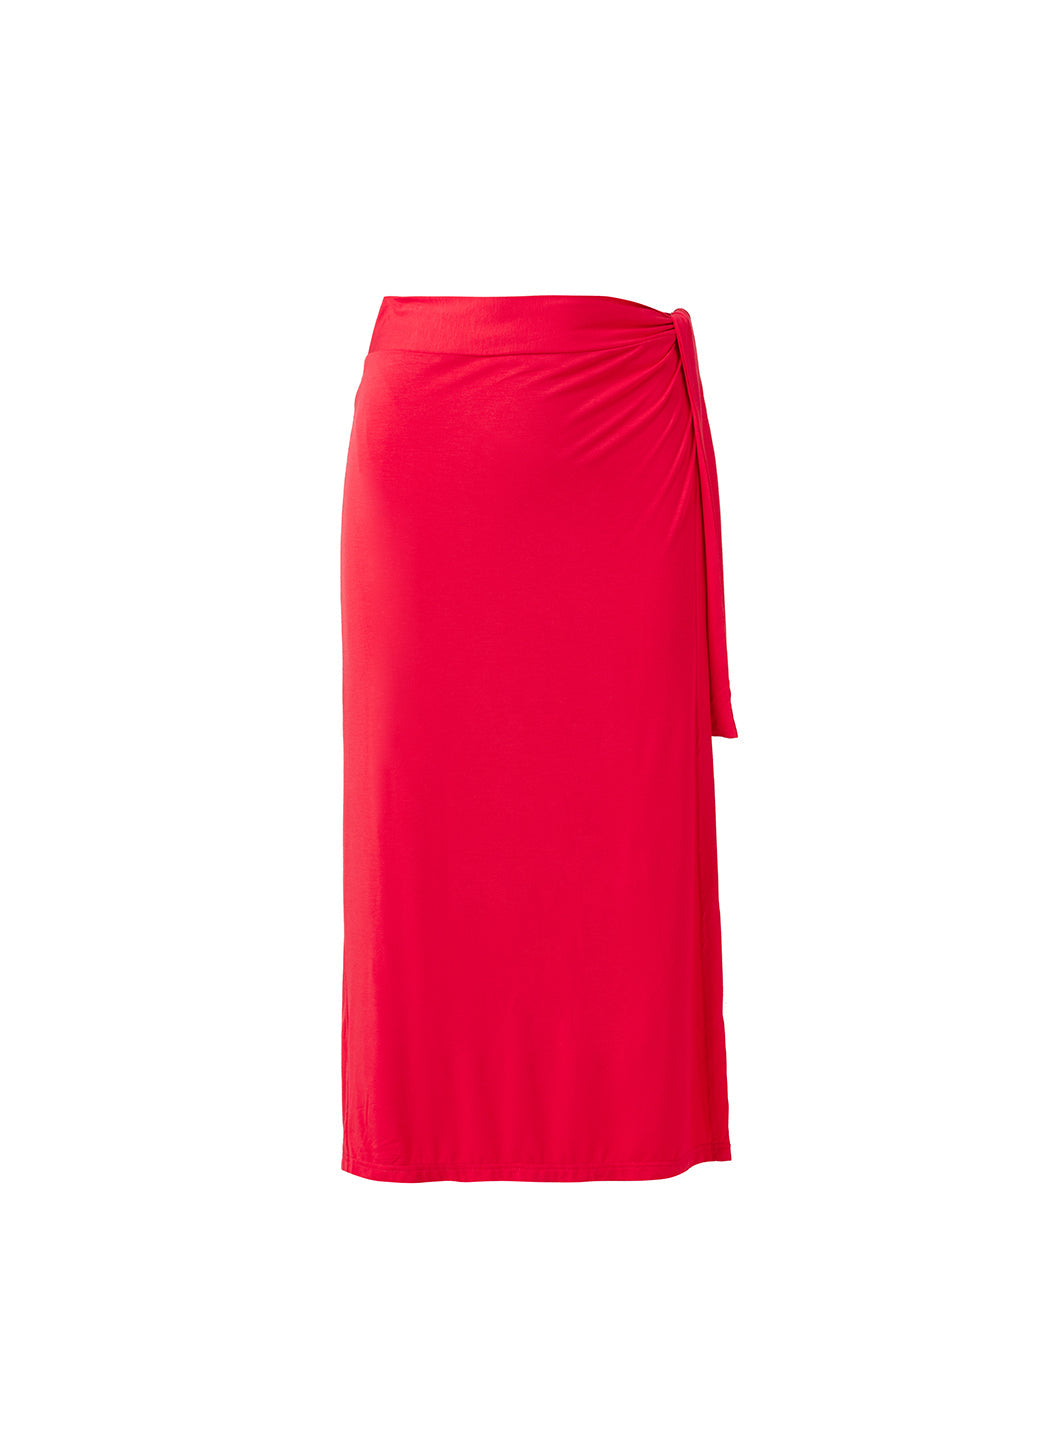 ida red skirt cutouts 2024